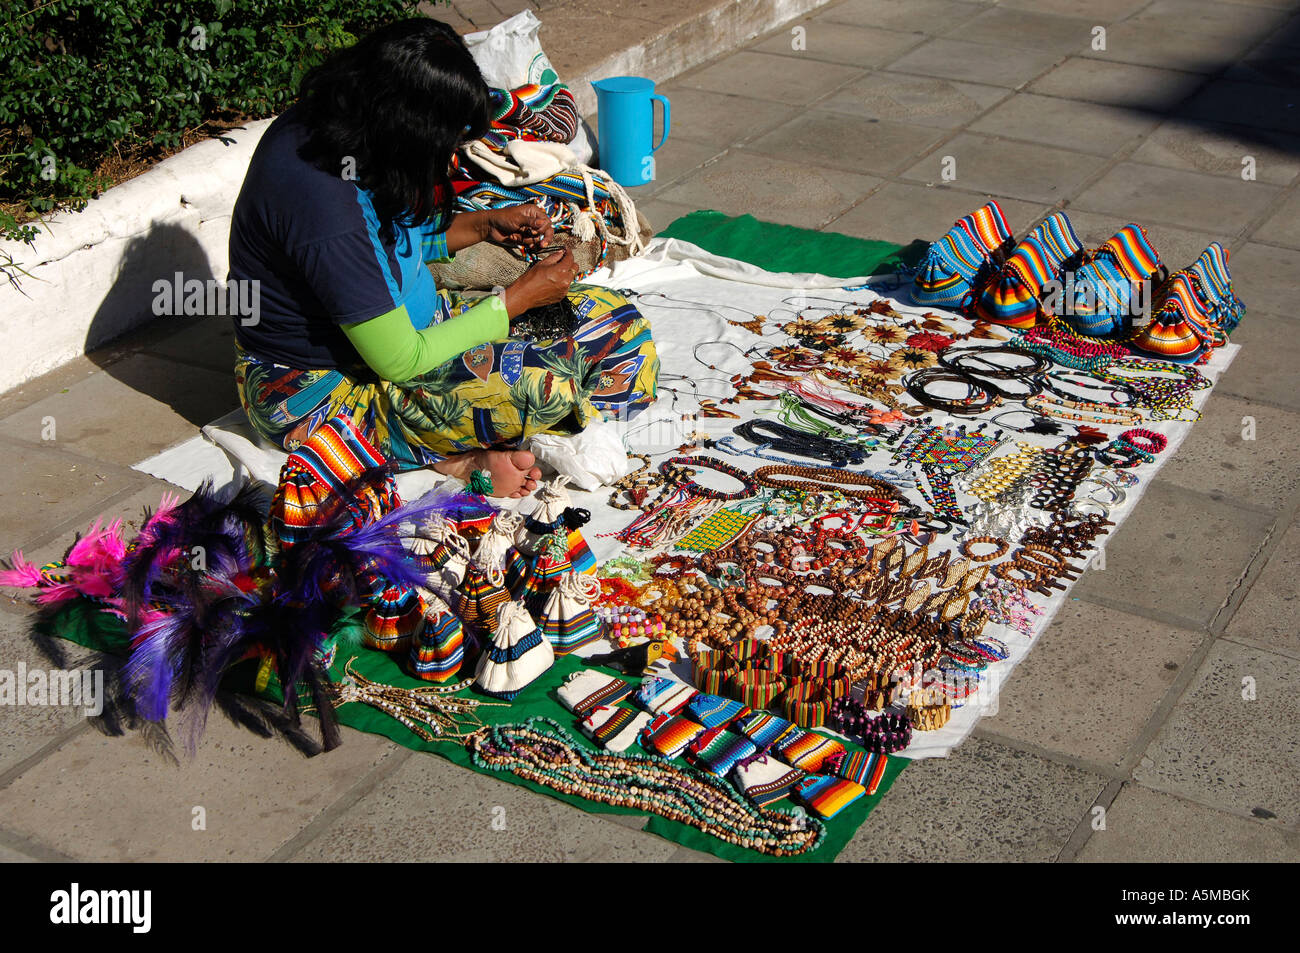 Indianischer Strassenhändler Asuncion Indian street vendor Südamerika south america america del sud sudamerica latinoamerica Lat Stock Photo